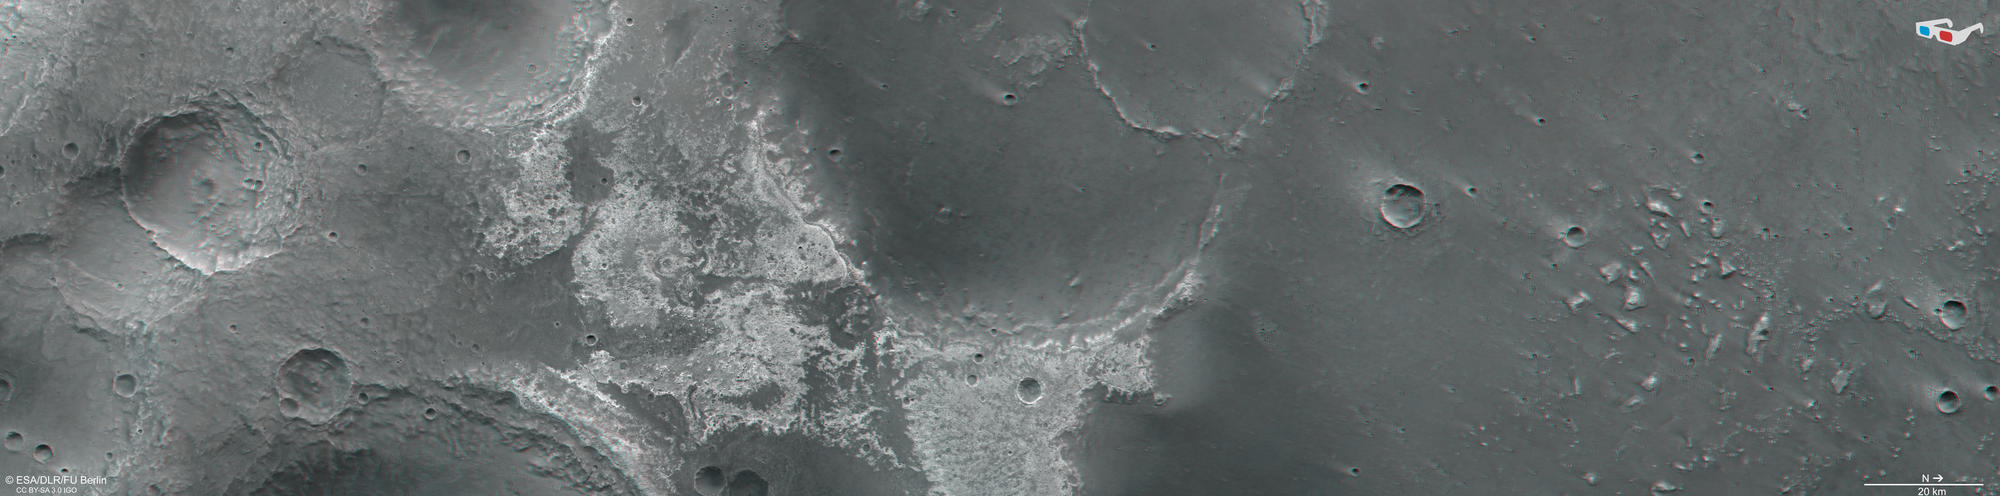 Mawrth Vallis - HRSC Anaglyphe